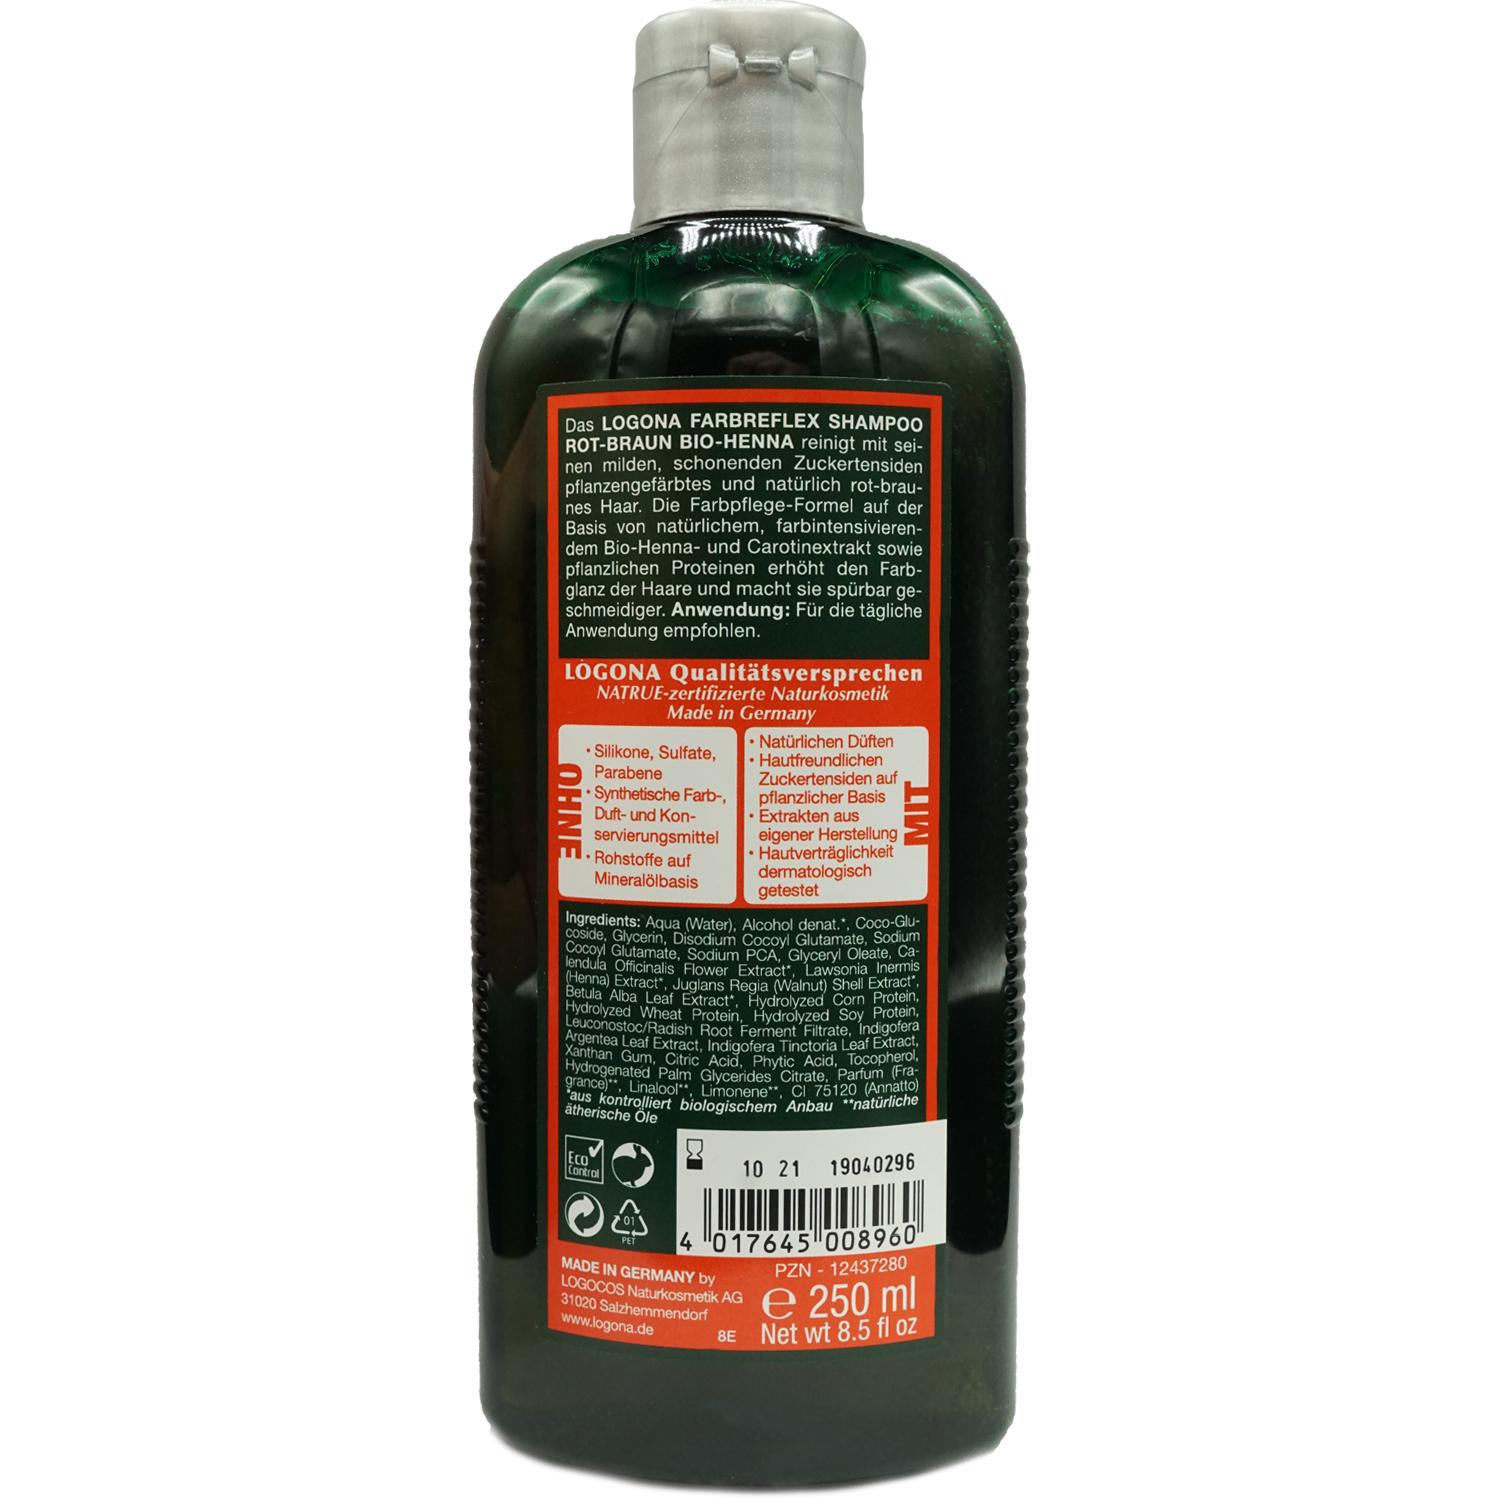 Shampoo Logona 250ml rot-braunes Henna Farbreflex Haar